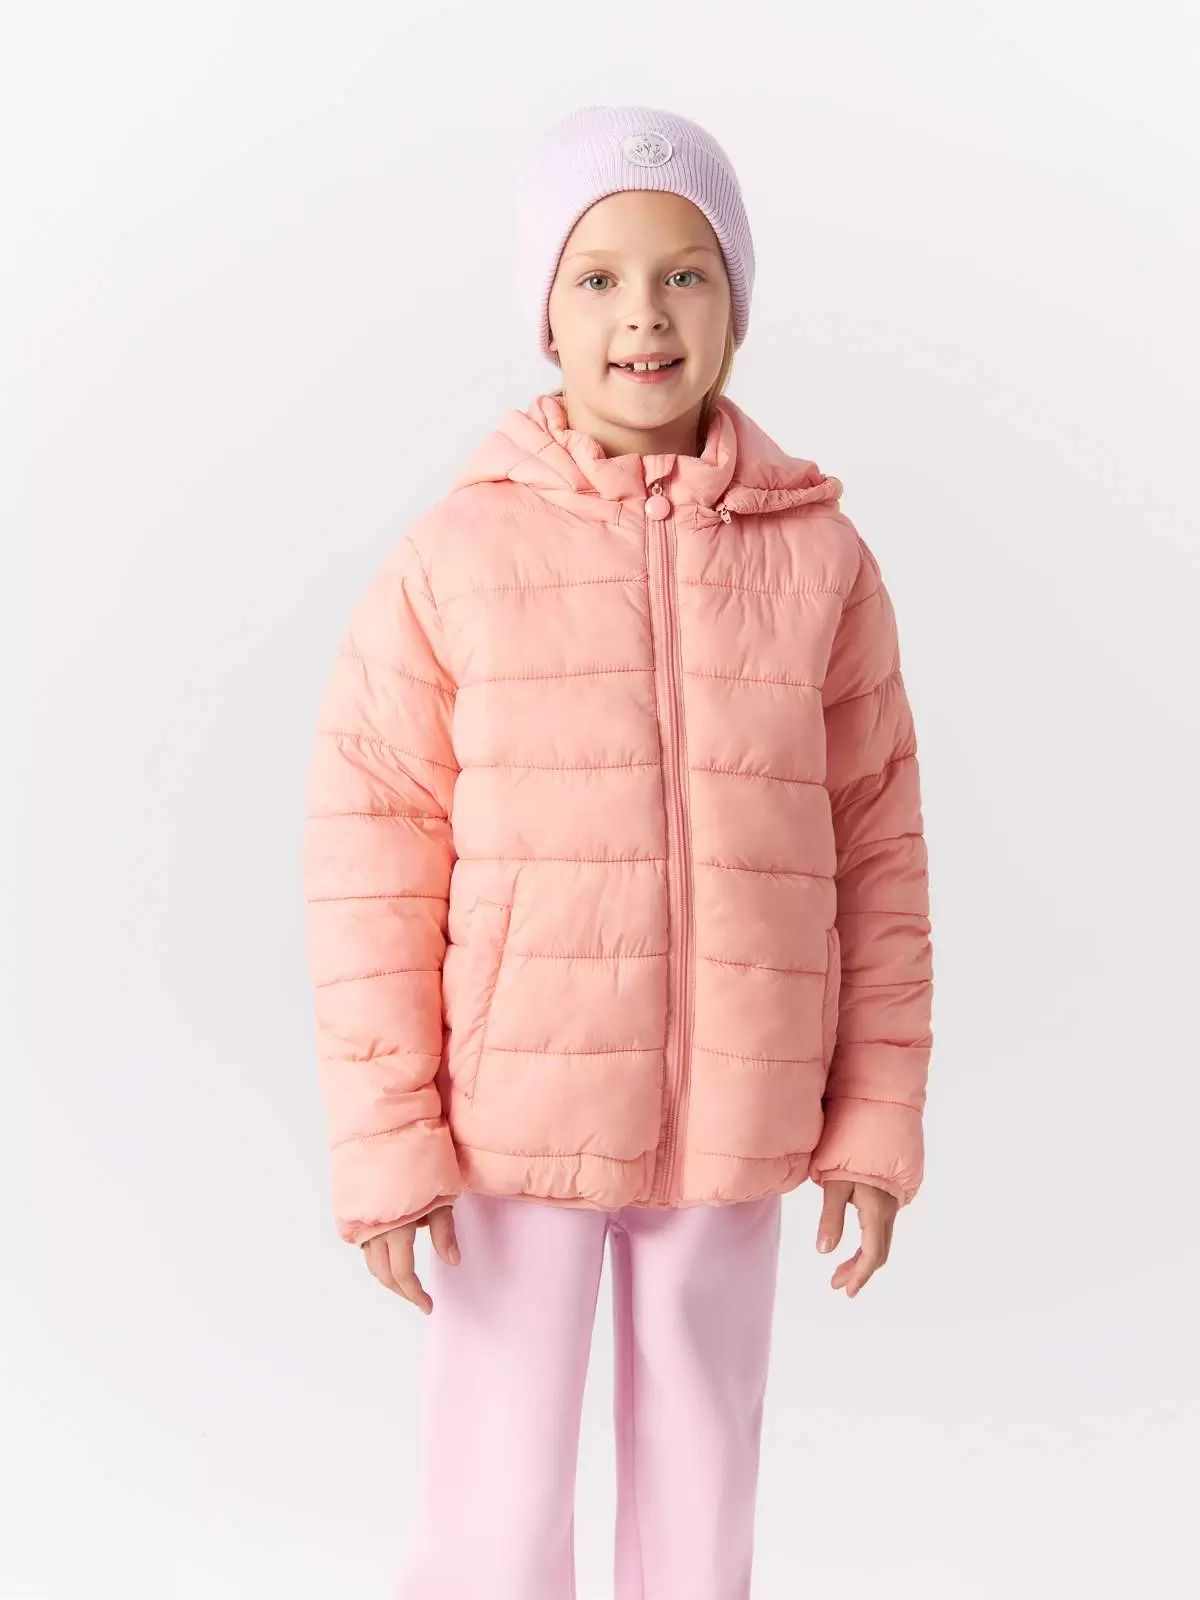 Куртка Mcstyles для девочки, размер 98, SMM13, розовая